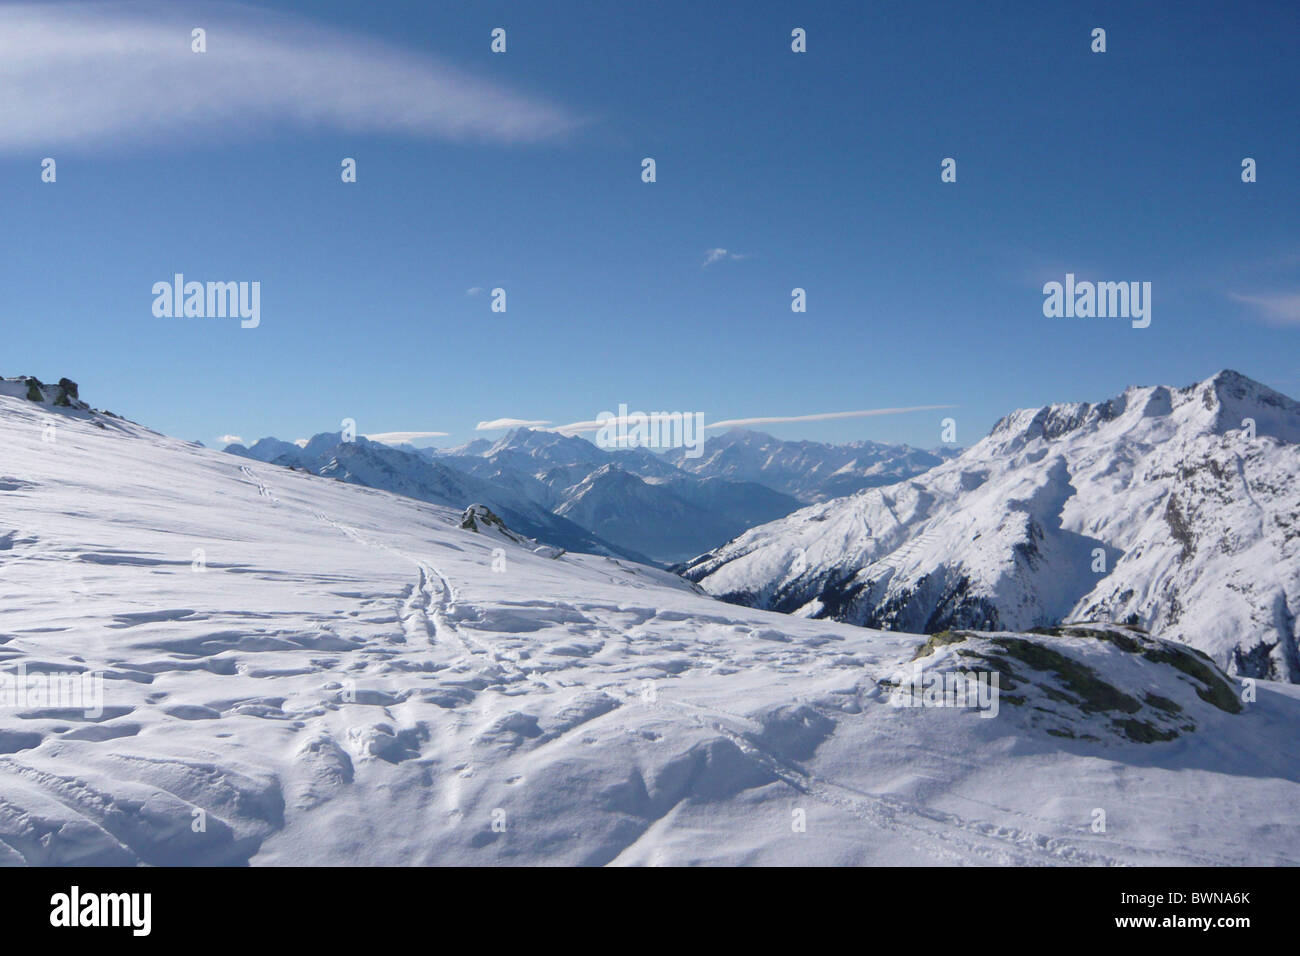 Switzerland Europe Canton Valais Bellwald Goms skiing area winter snow snowed alps alpine mountains landsc Stock Photo